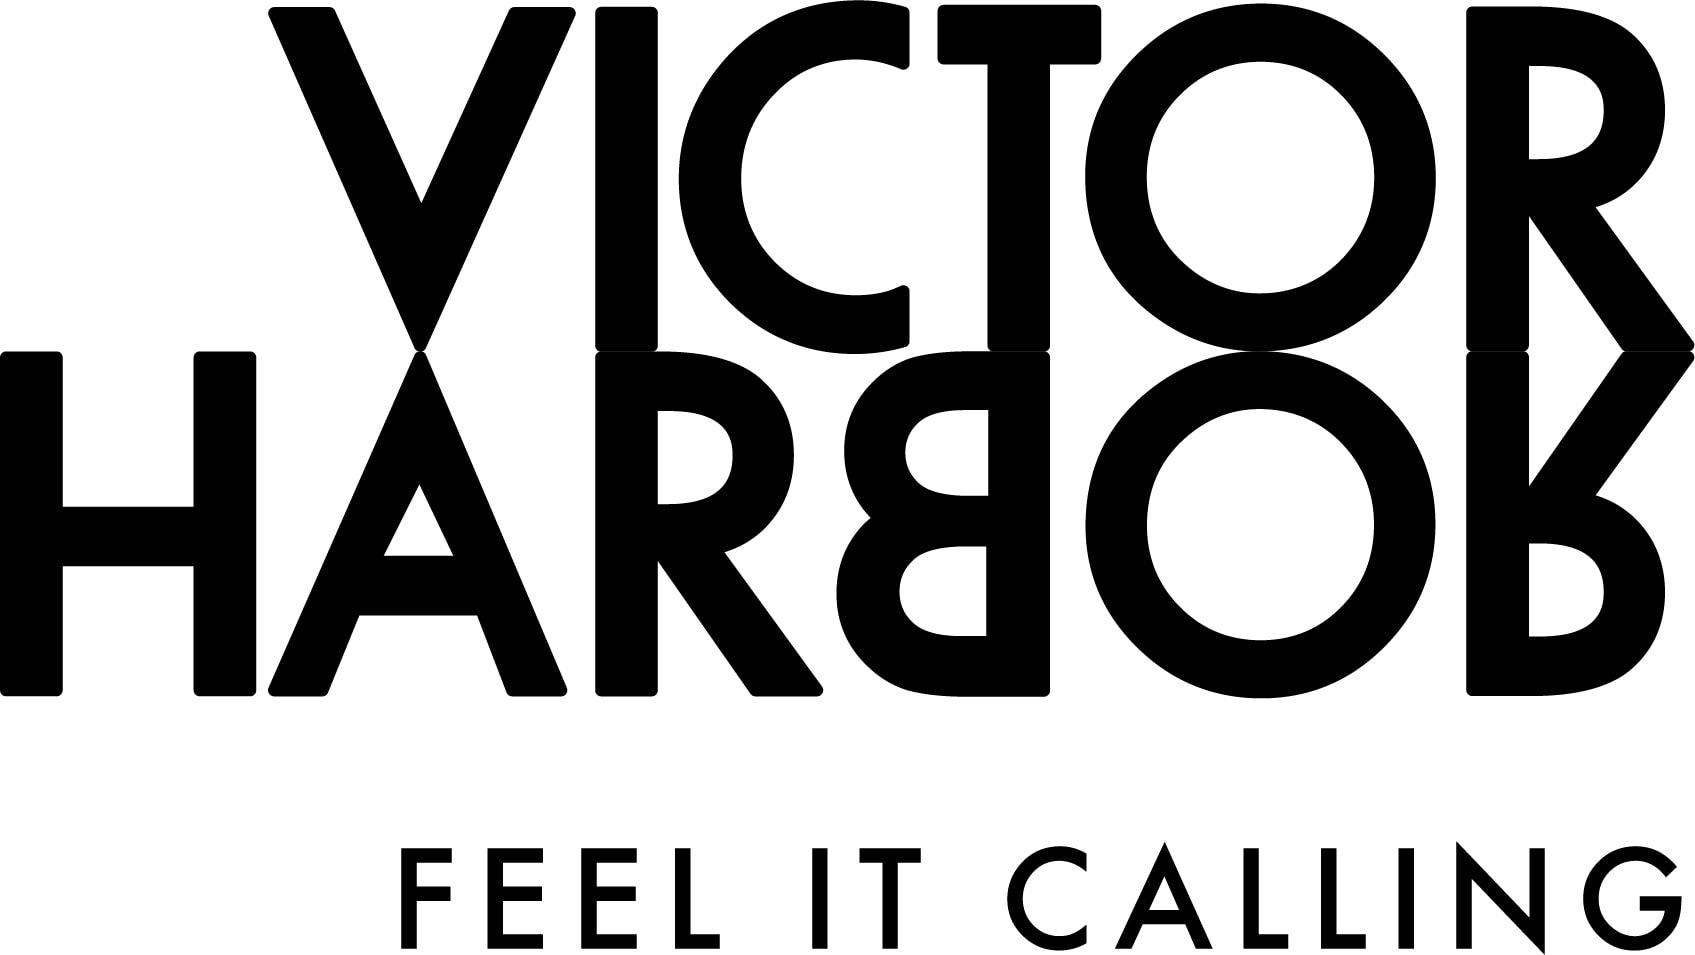 Victor harbor Feel It Calling